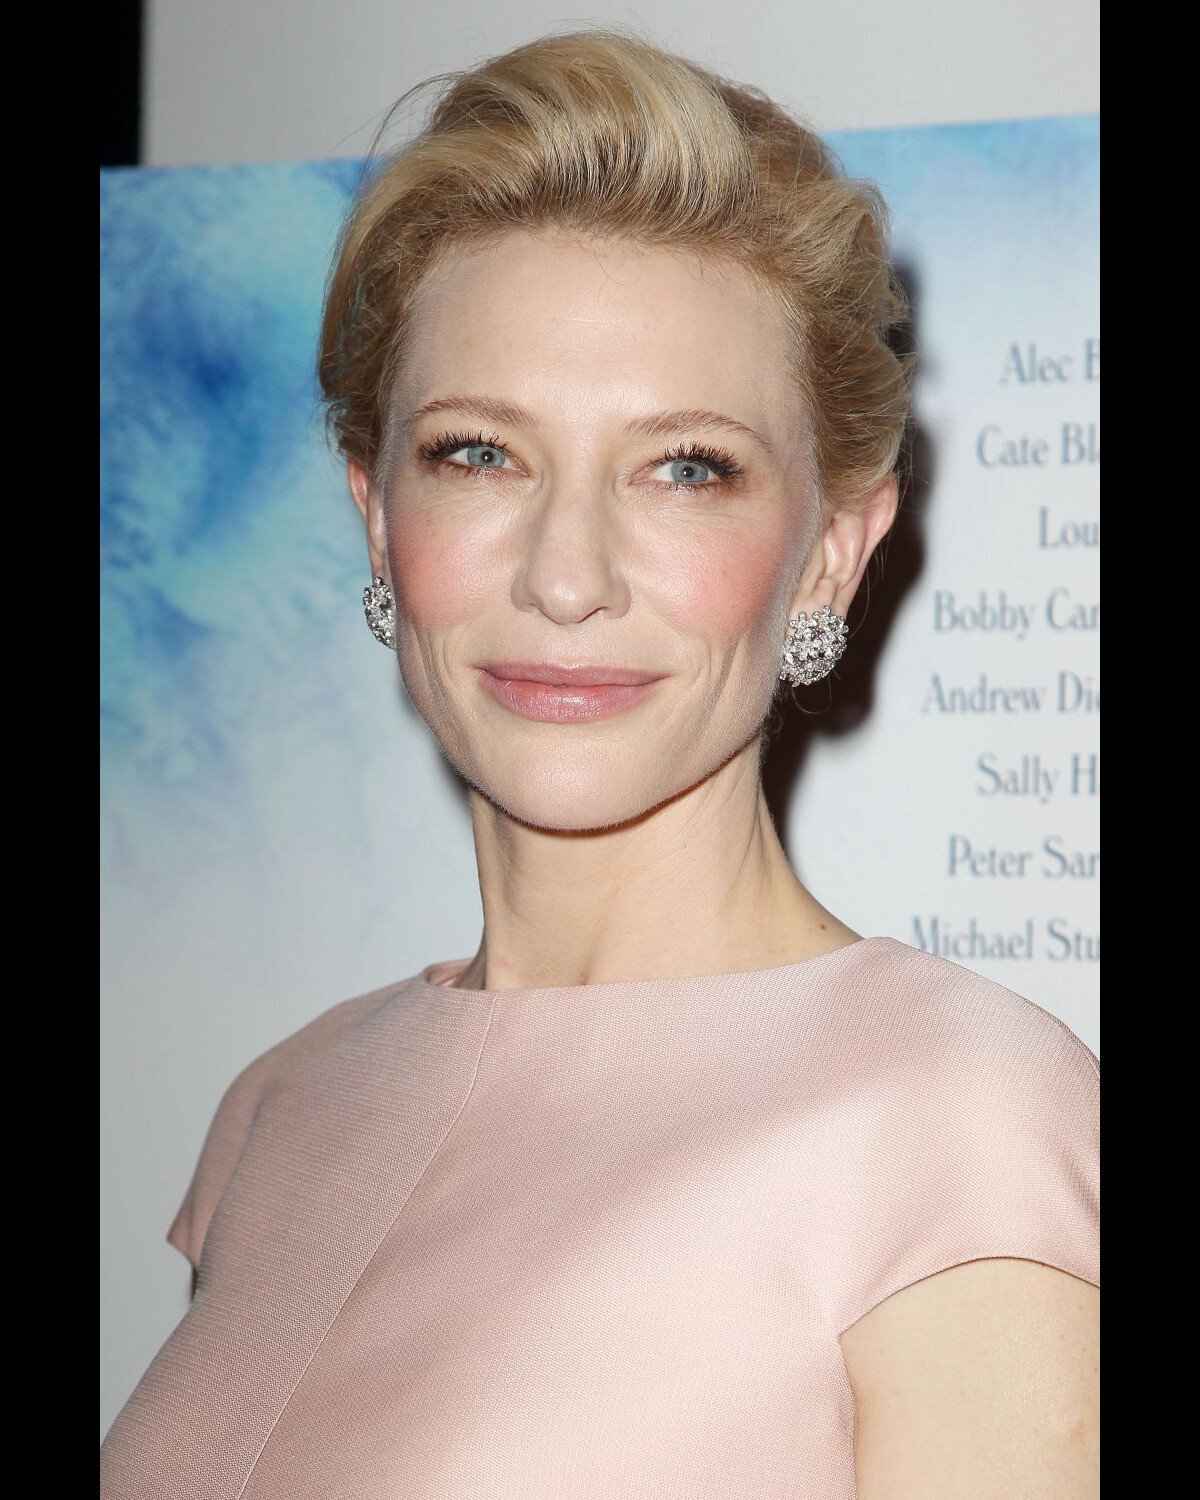 Cate Blanchett Talks Prepping for 'Blue Jasmine' in Socialite NYC: Photo  2915291, Cate Blanchett Photos